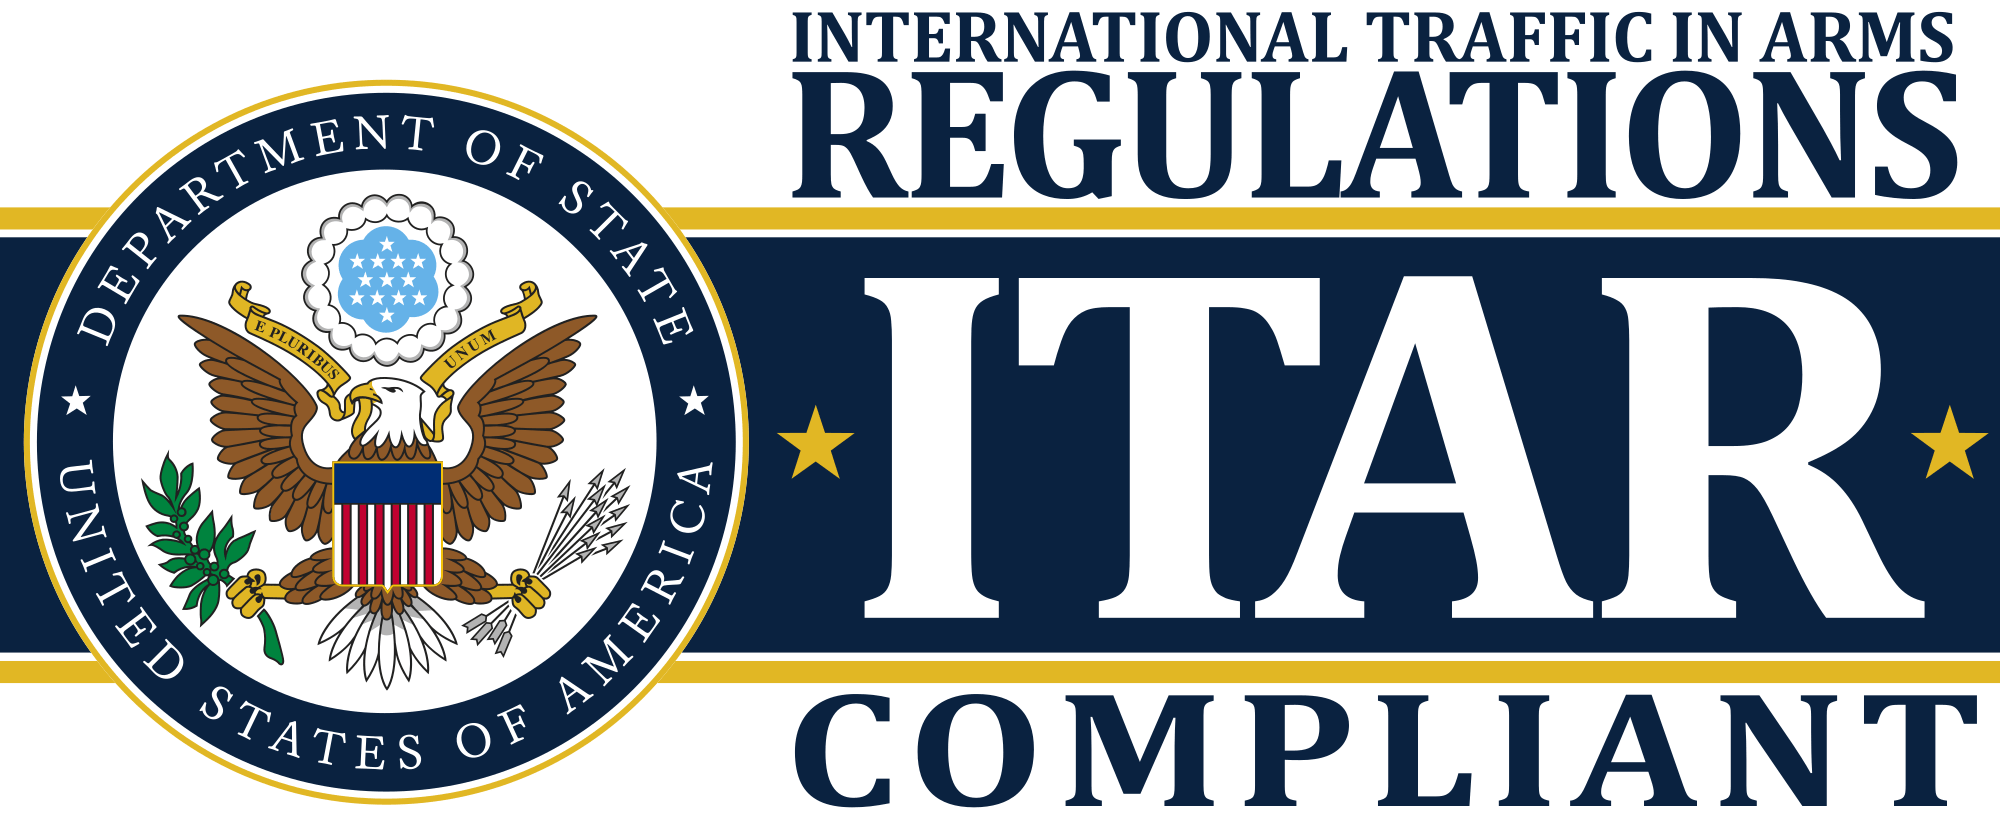 ITAR International Traffic in Arms Regulations Compliant